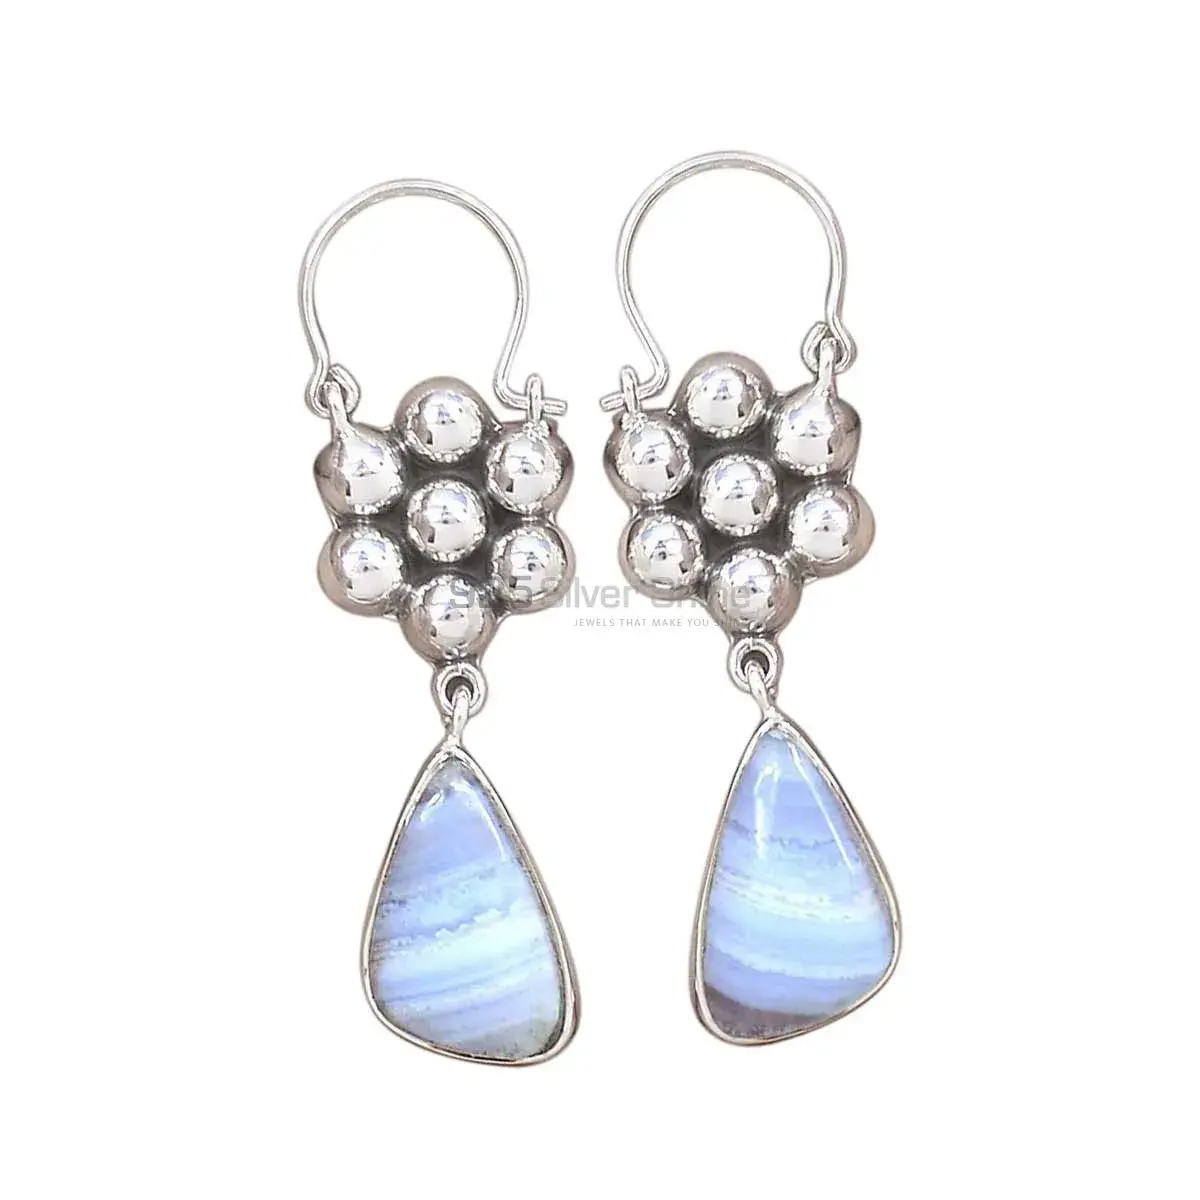 Blue Lace Agate Gemstone Earrings Exporters In 925 Sterling Silver Jewelry 925SE3083